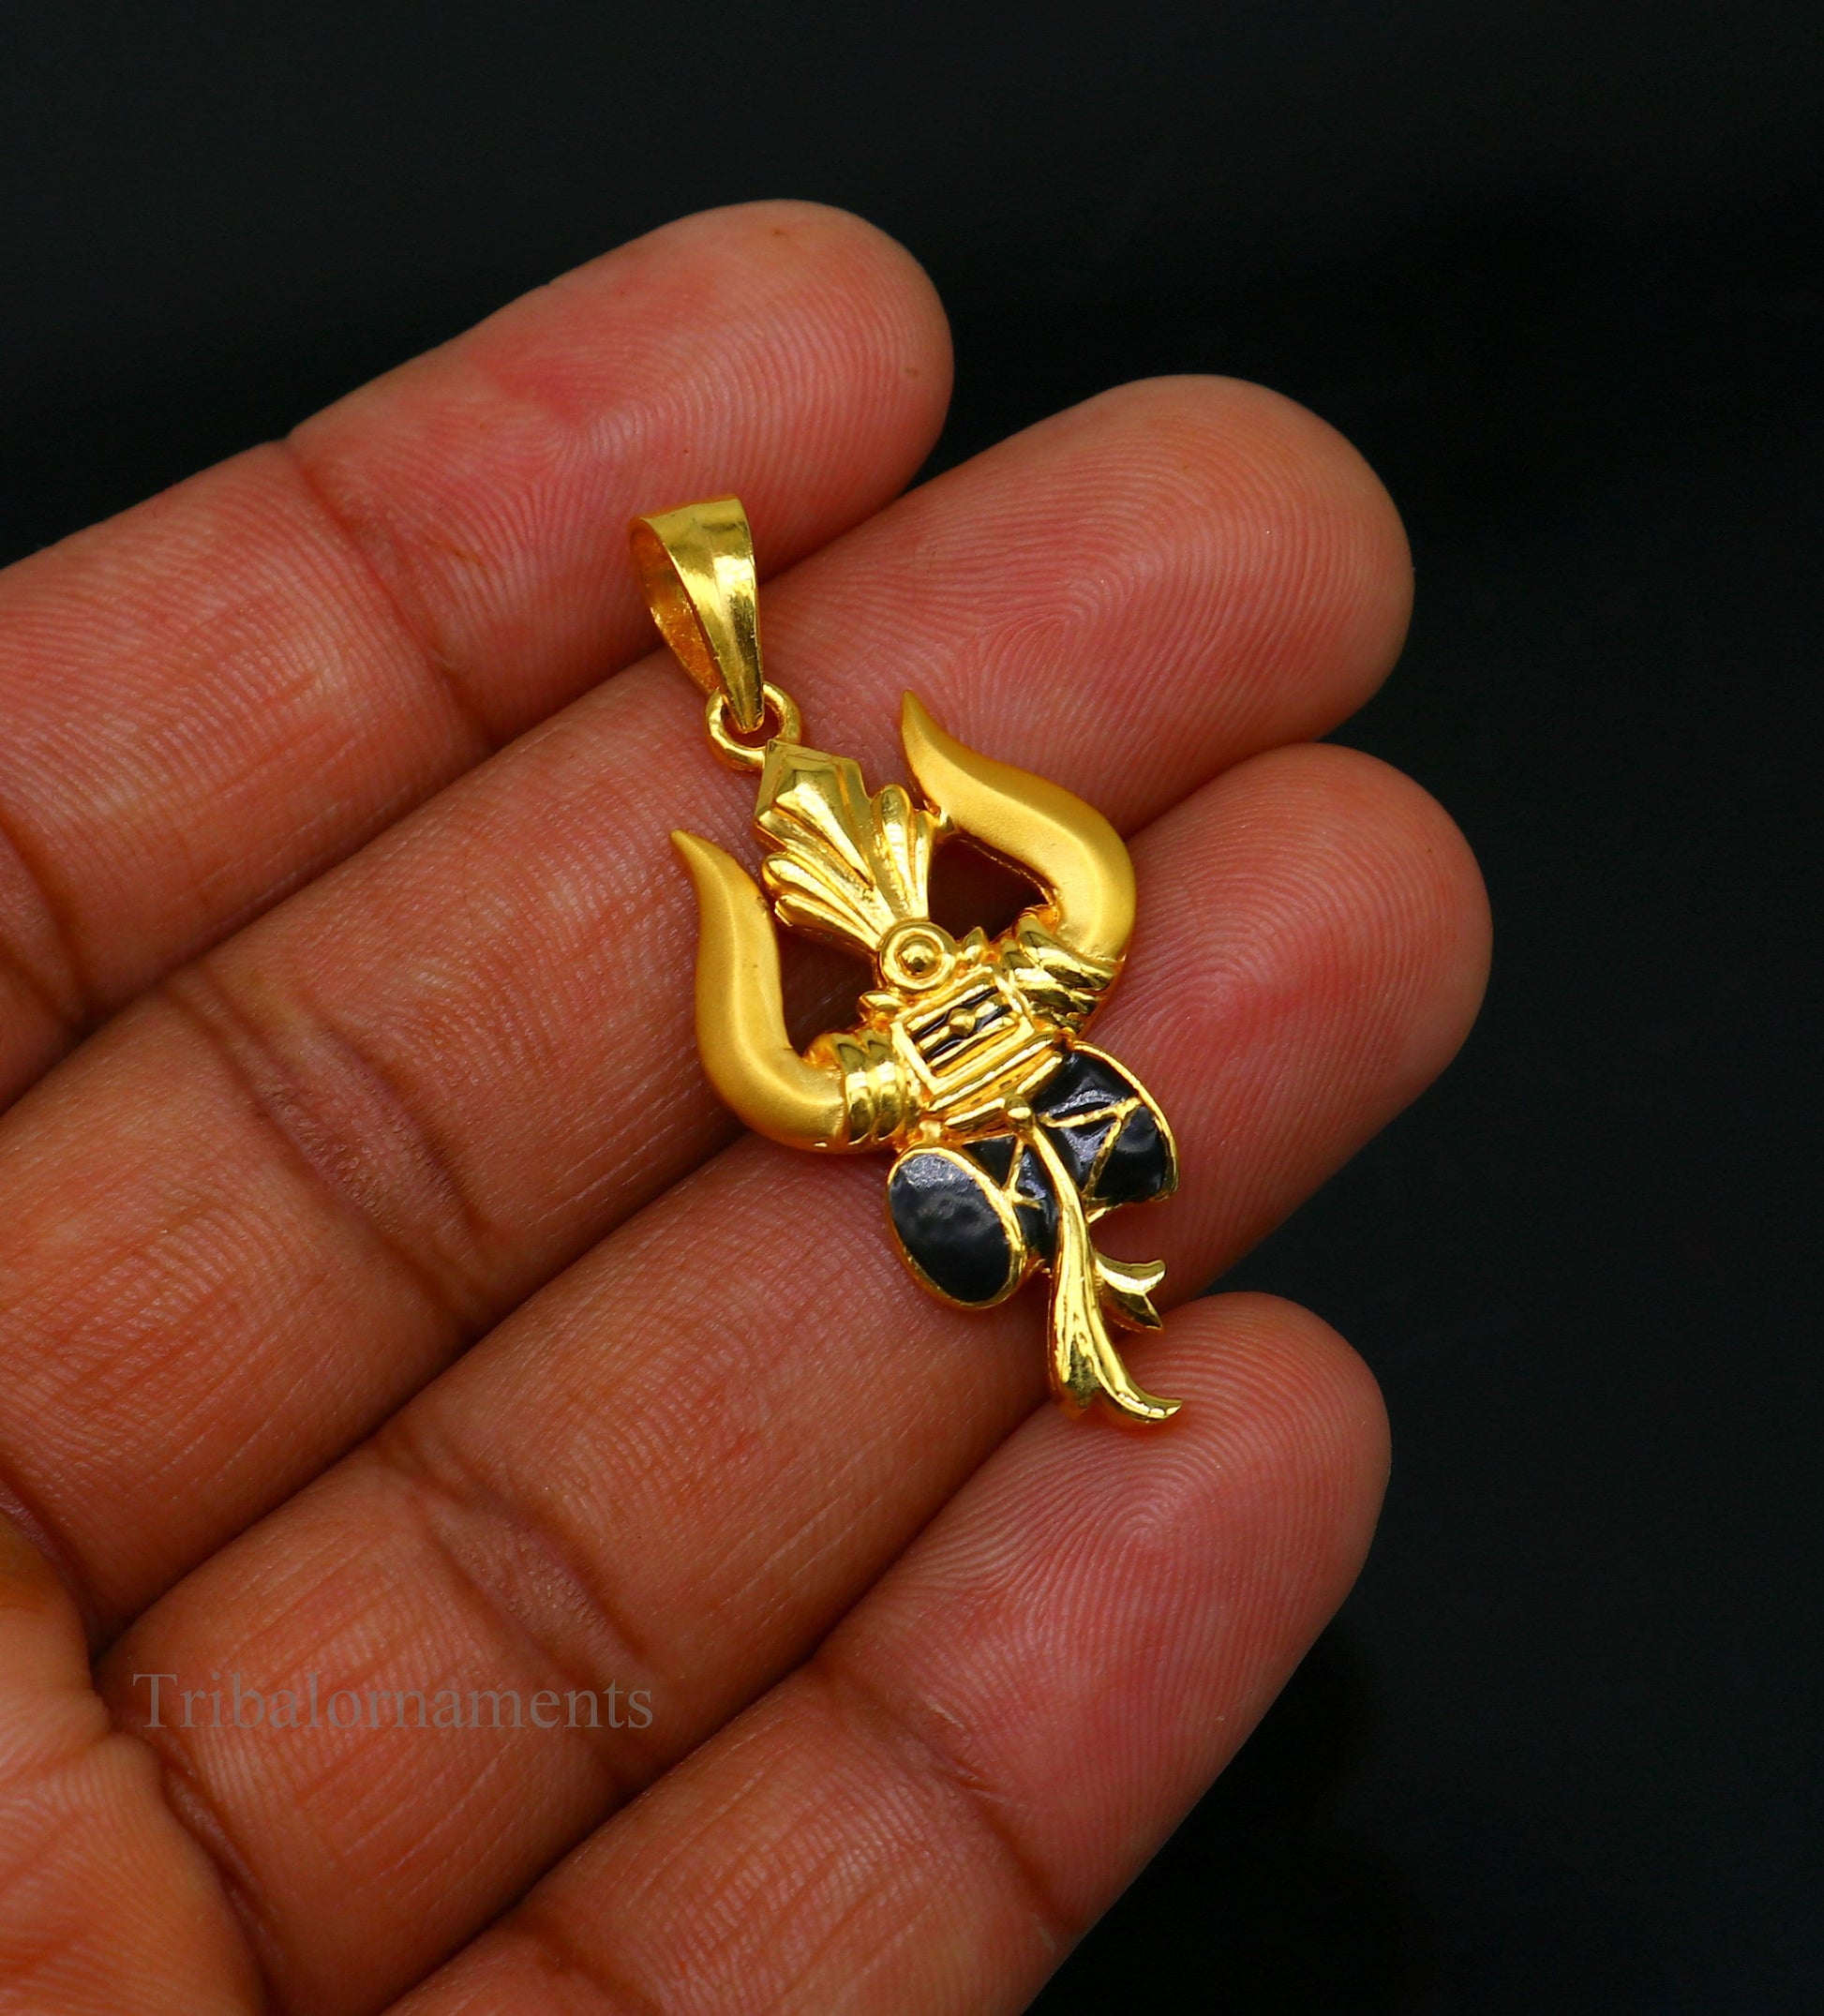 22Kt yellow gold handmade customized lord Shiva Trident Trishul pendant, best men's women's gifting jewelry stunning stylish jewelry gp22 - TRIBAL ORNAMENTS